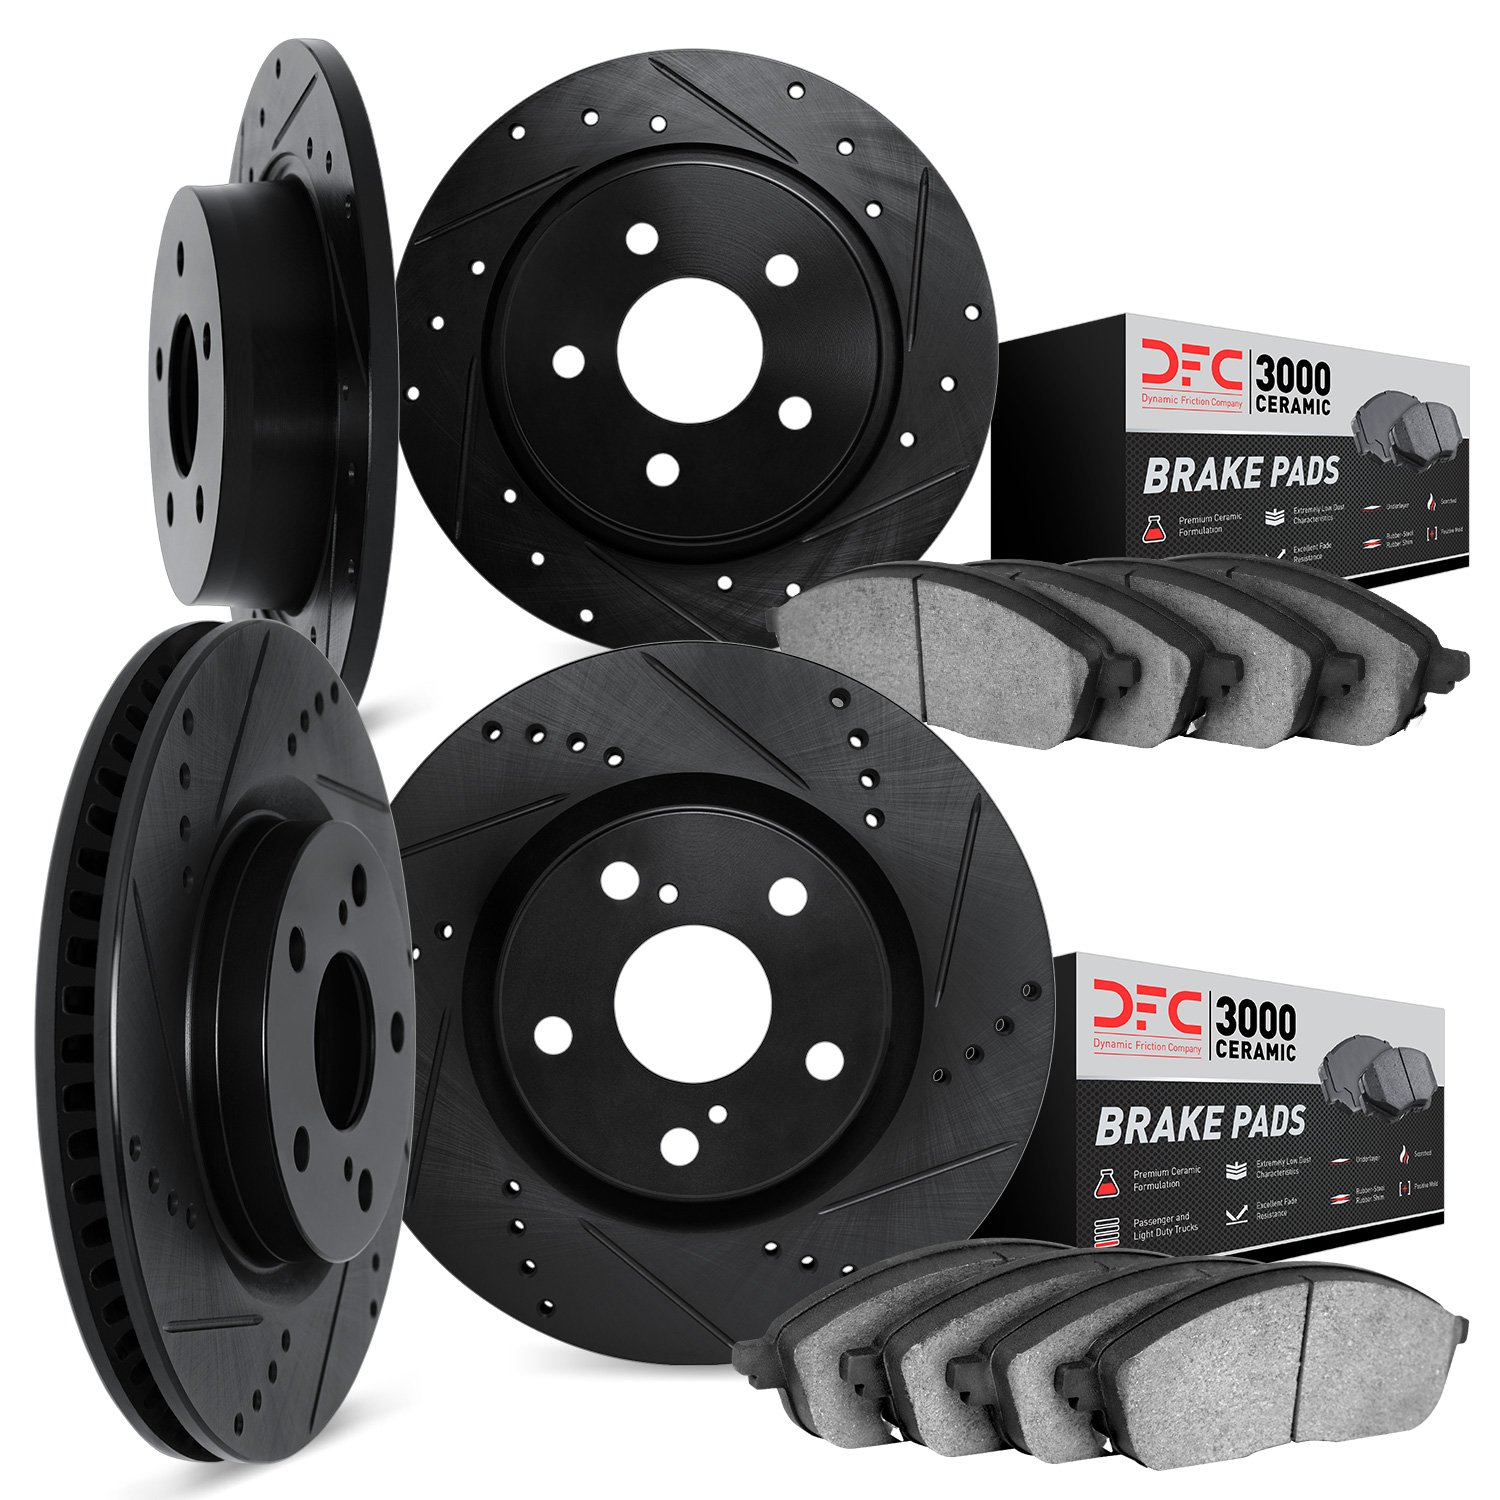 8304-76084 Drilled/Slotted Brake Rotors with 3000-Series Ceramic Brake Pads Kit [Black], 2009-2018 Multiple Makes/Models, Positi